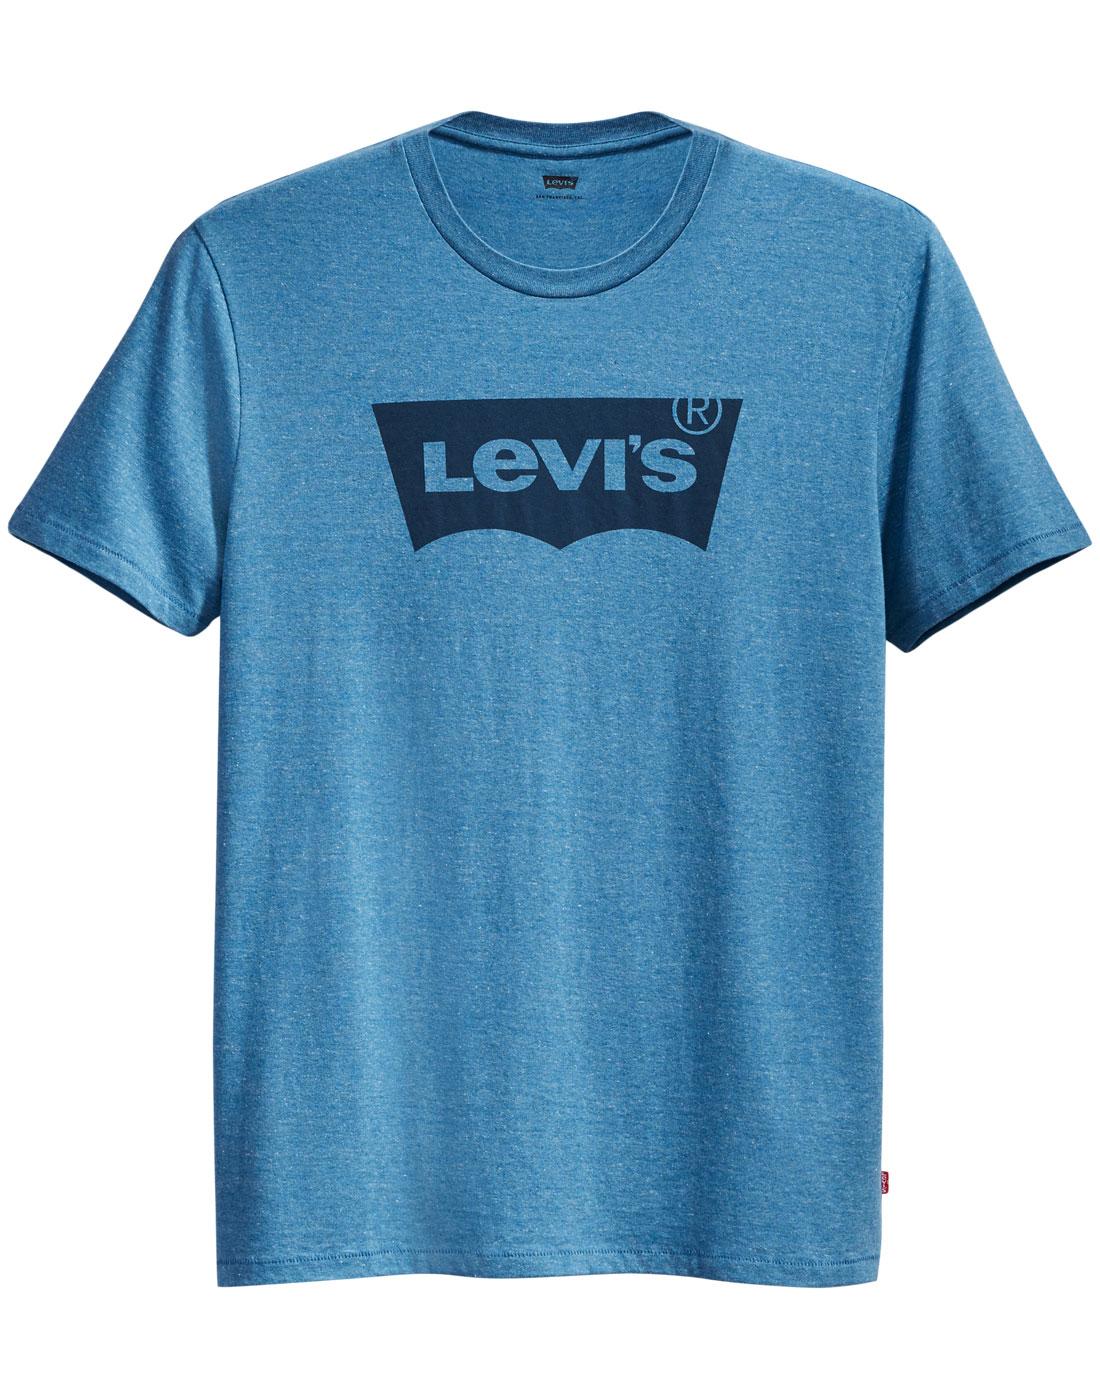 LEVI'S Men's Retro Mod Housemark Batwing Logo T-Shirt Dark Blue